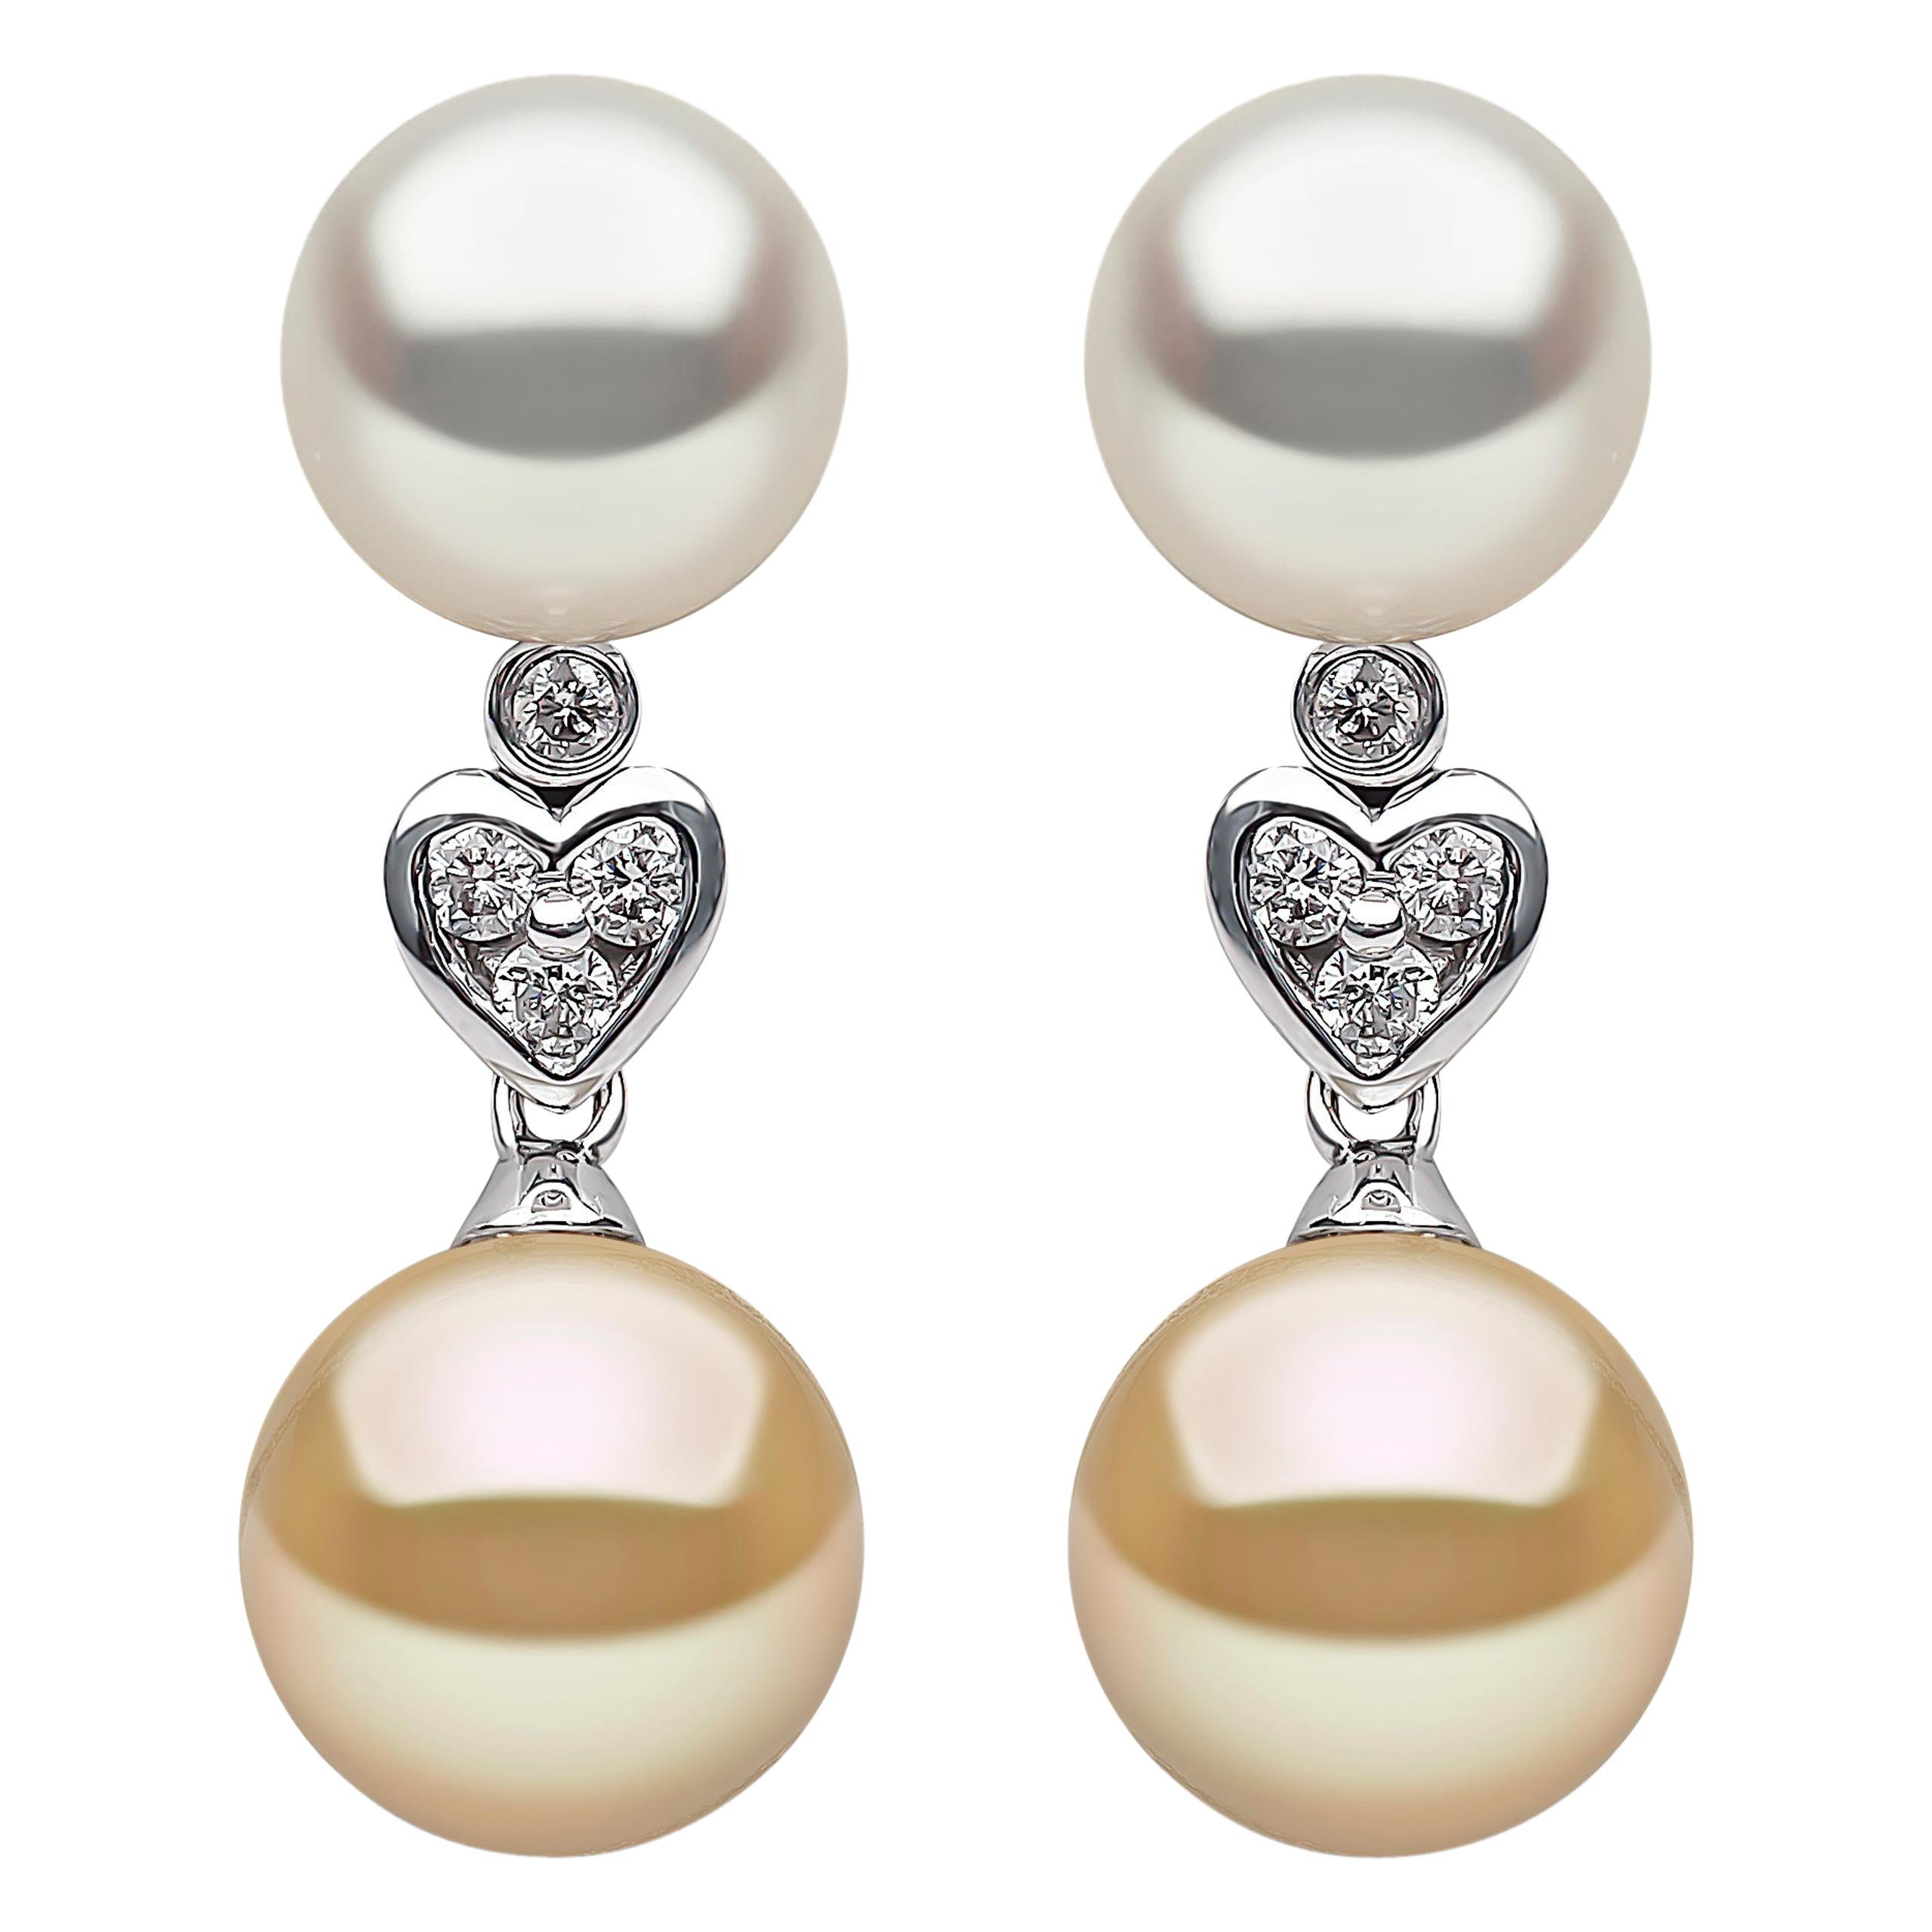 Yoko London White & Golden South Sea Pearl & Diamond Earrings in 18K White Gold